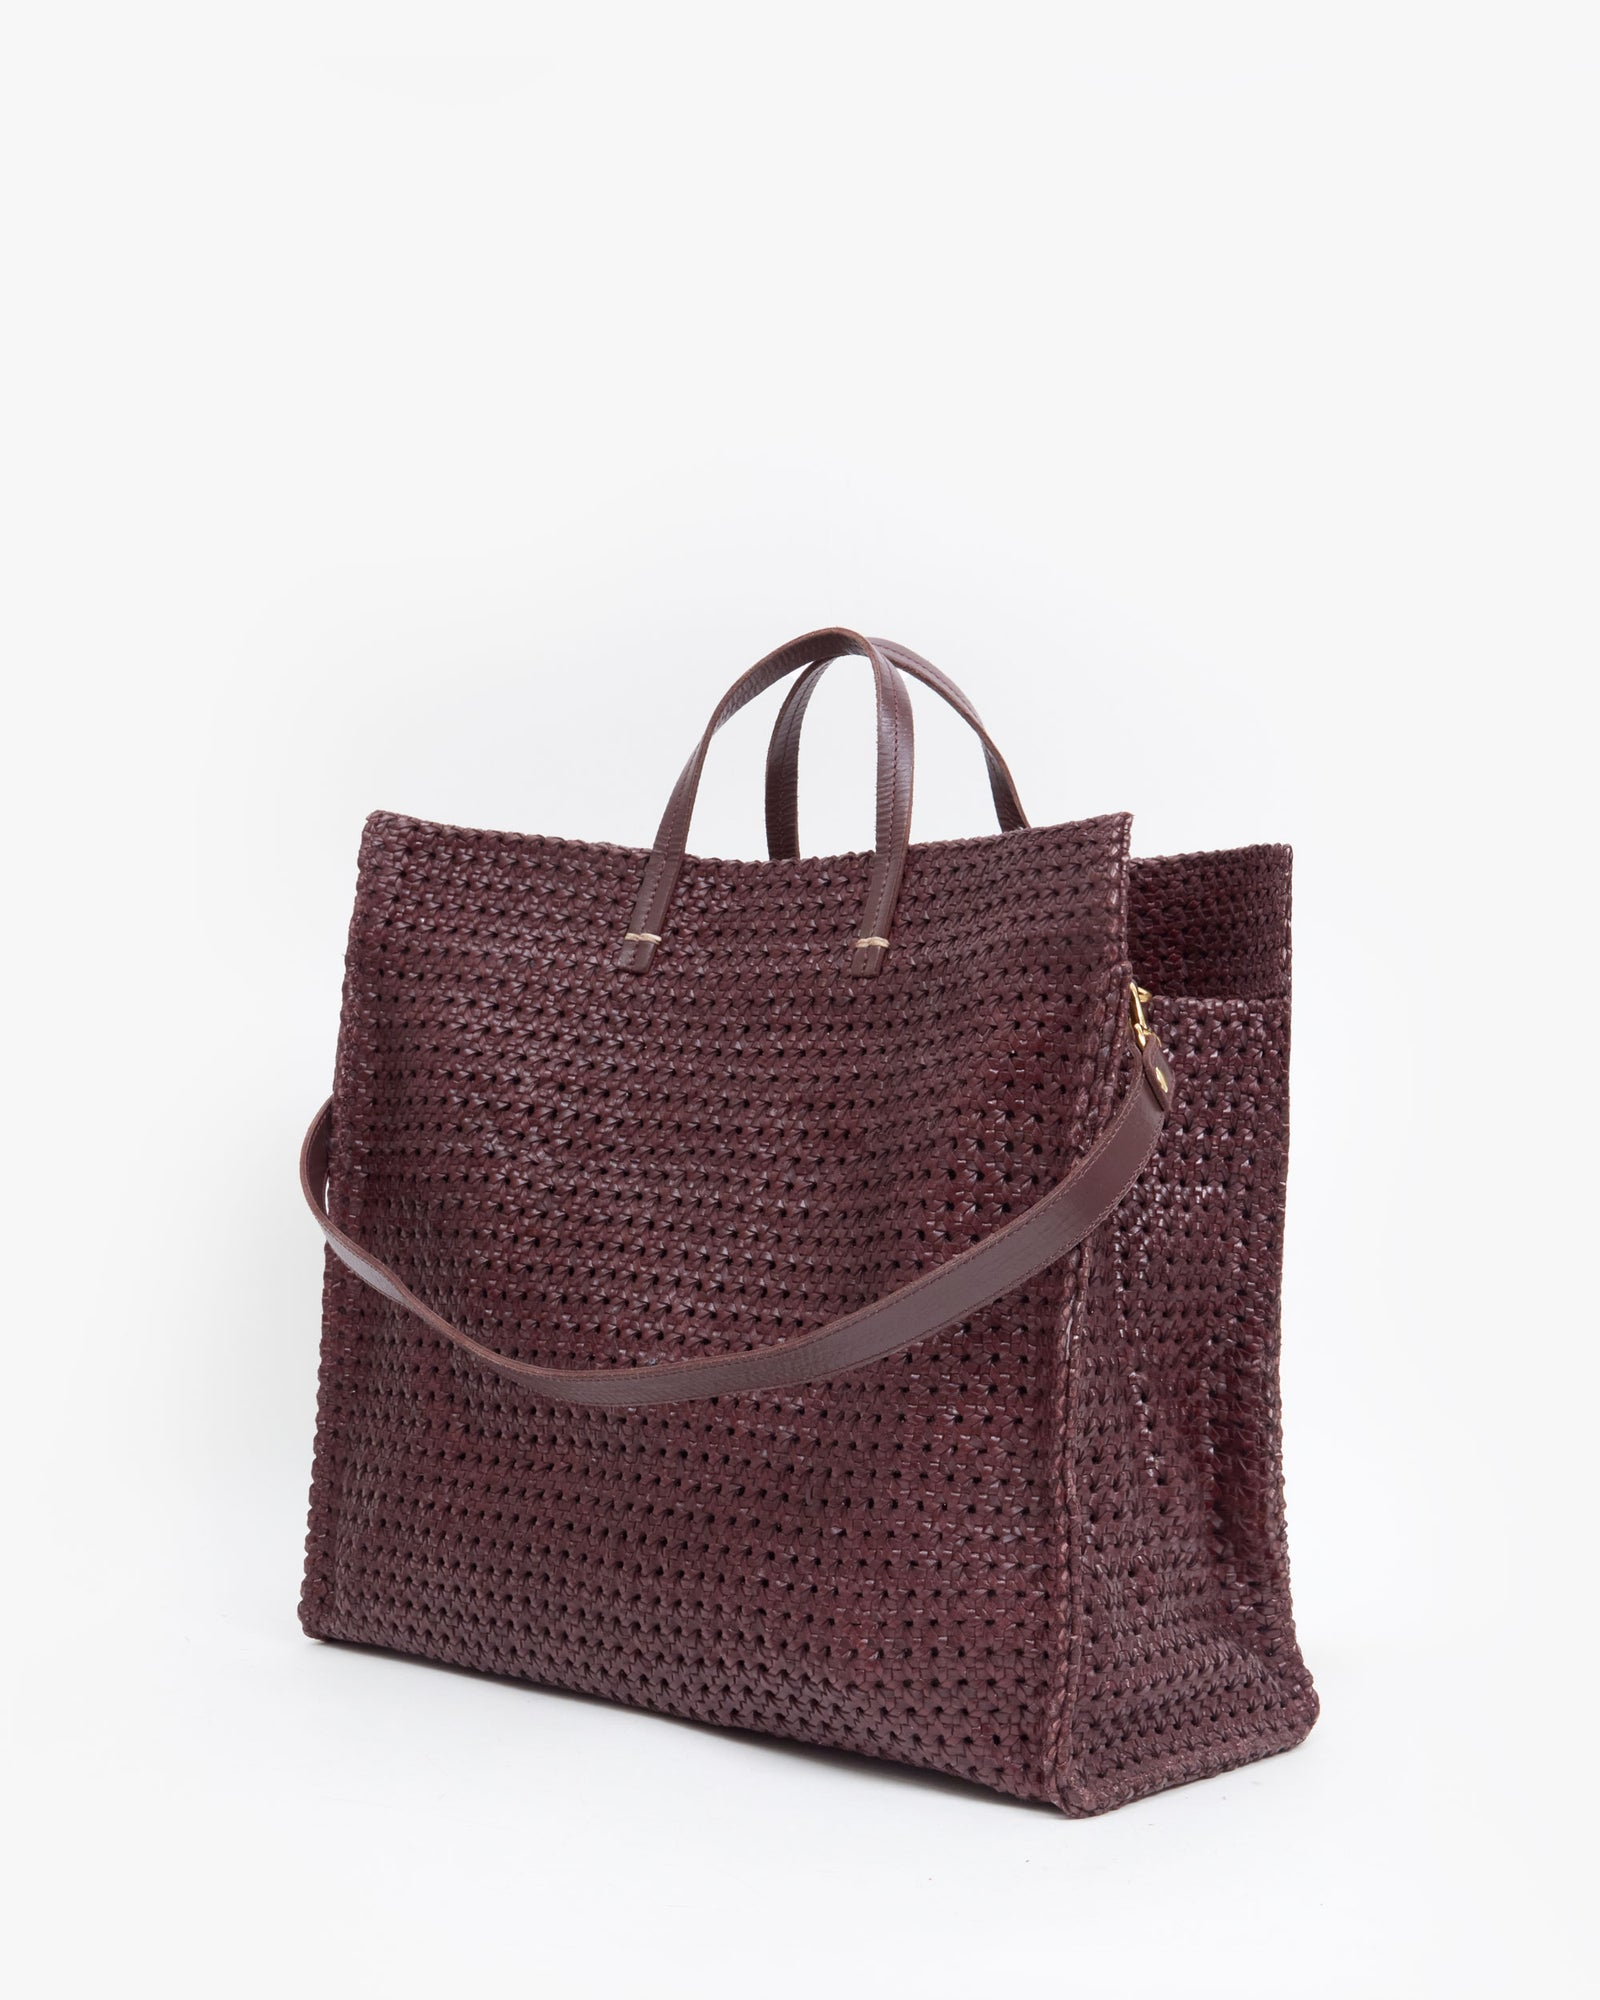 Clare V Bags, Shop Women's Handbags